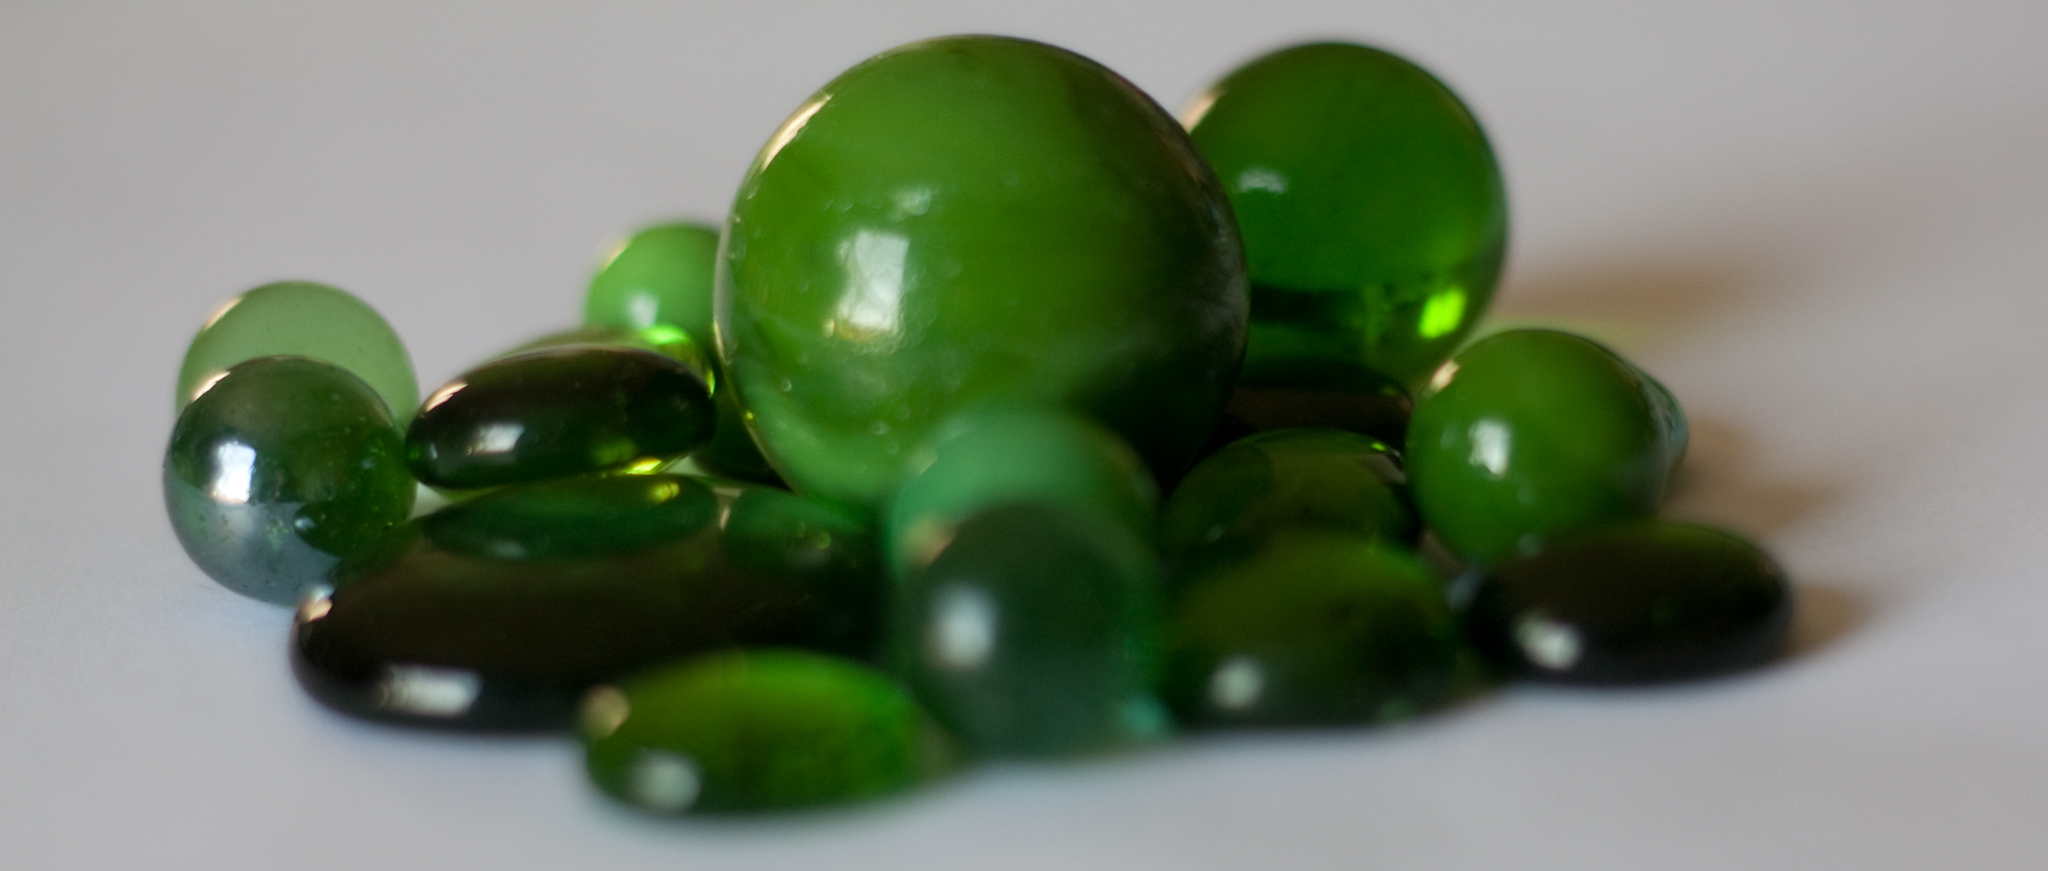 green-marbles-isabelle-puauat.jpg